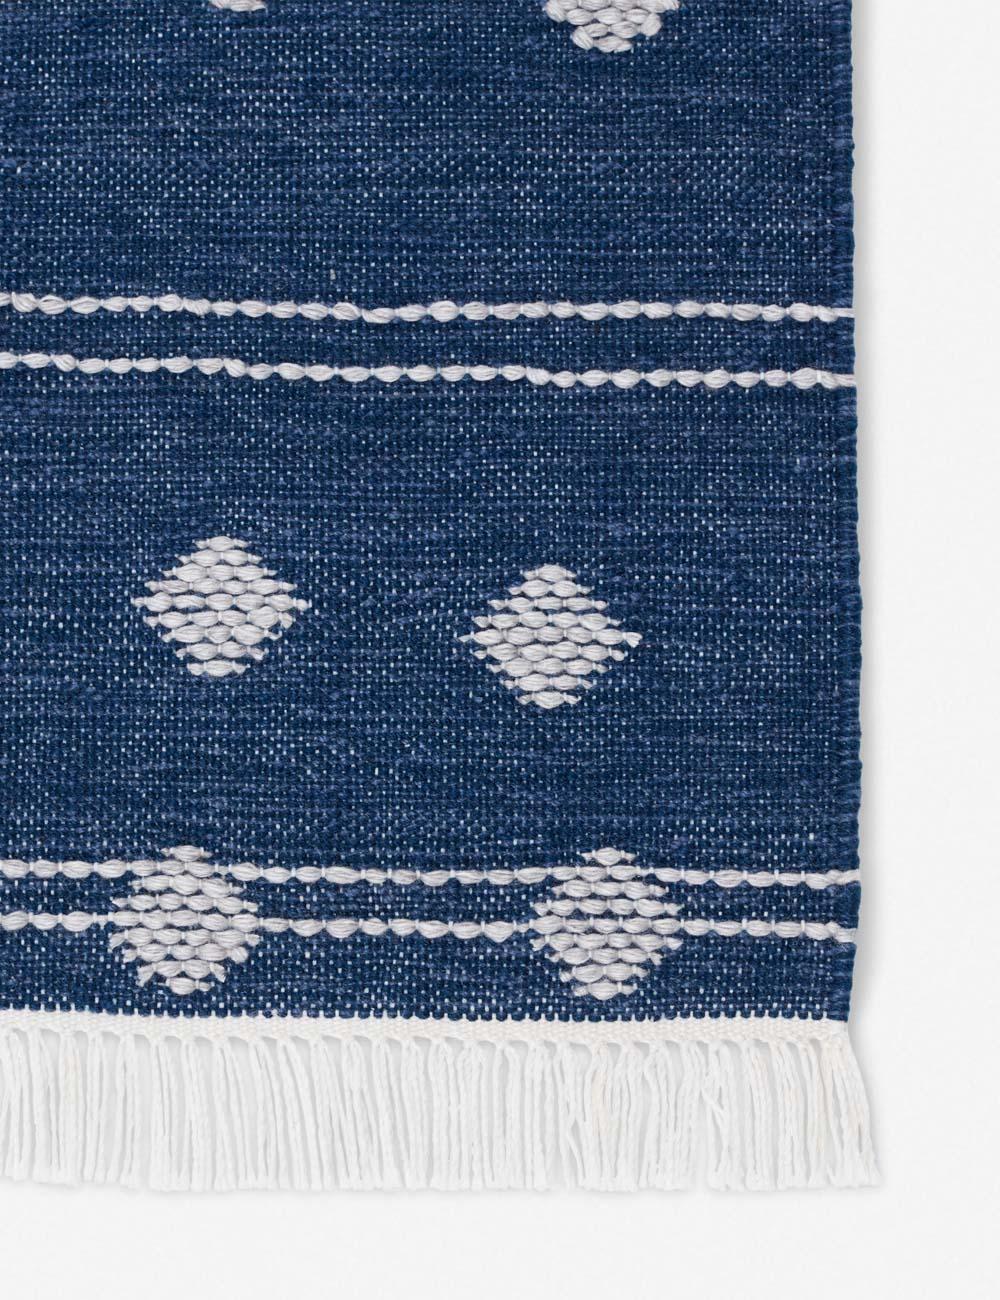 Calli Moroccan-Inspired 4'x6' Blue and White Flatweave Area Rug